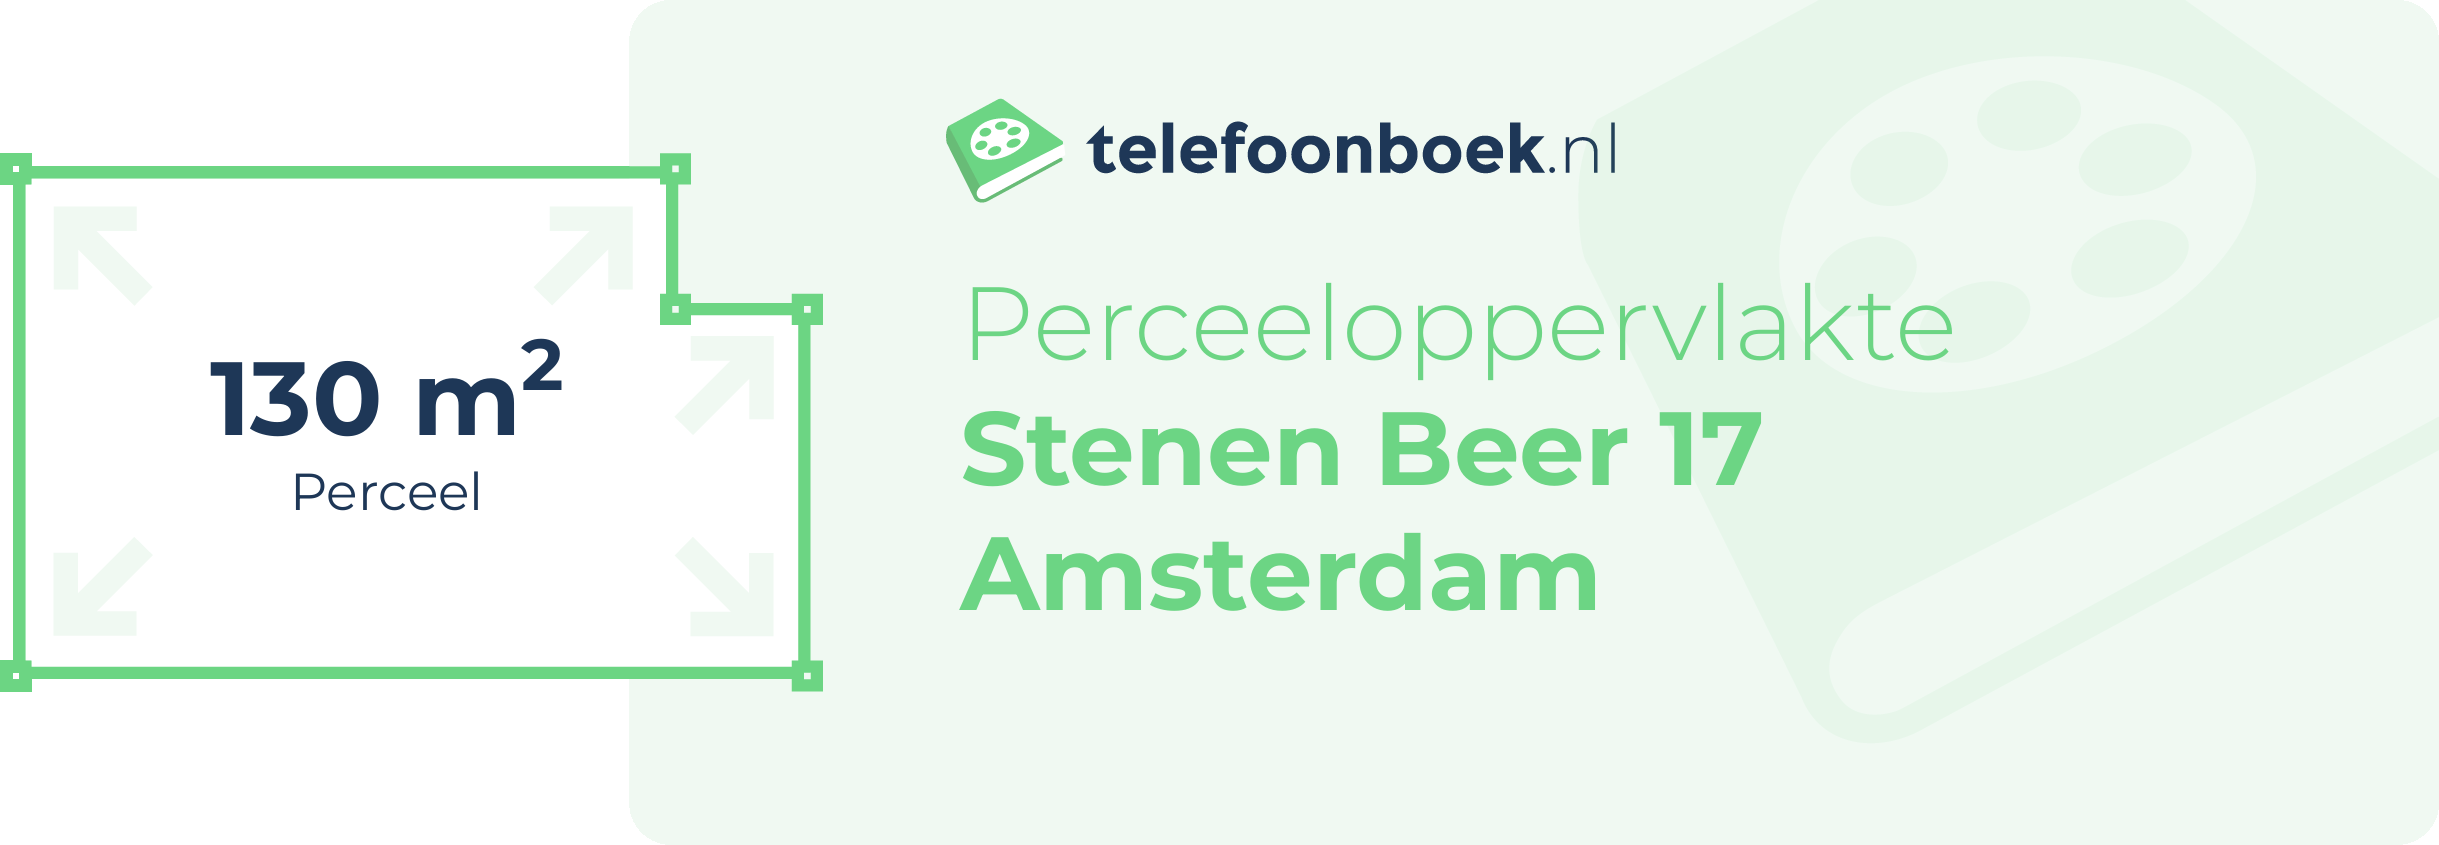 Perceeloppervlakte Stenen Beer 17 Amsterdam